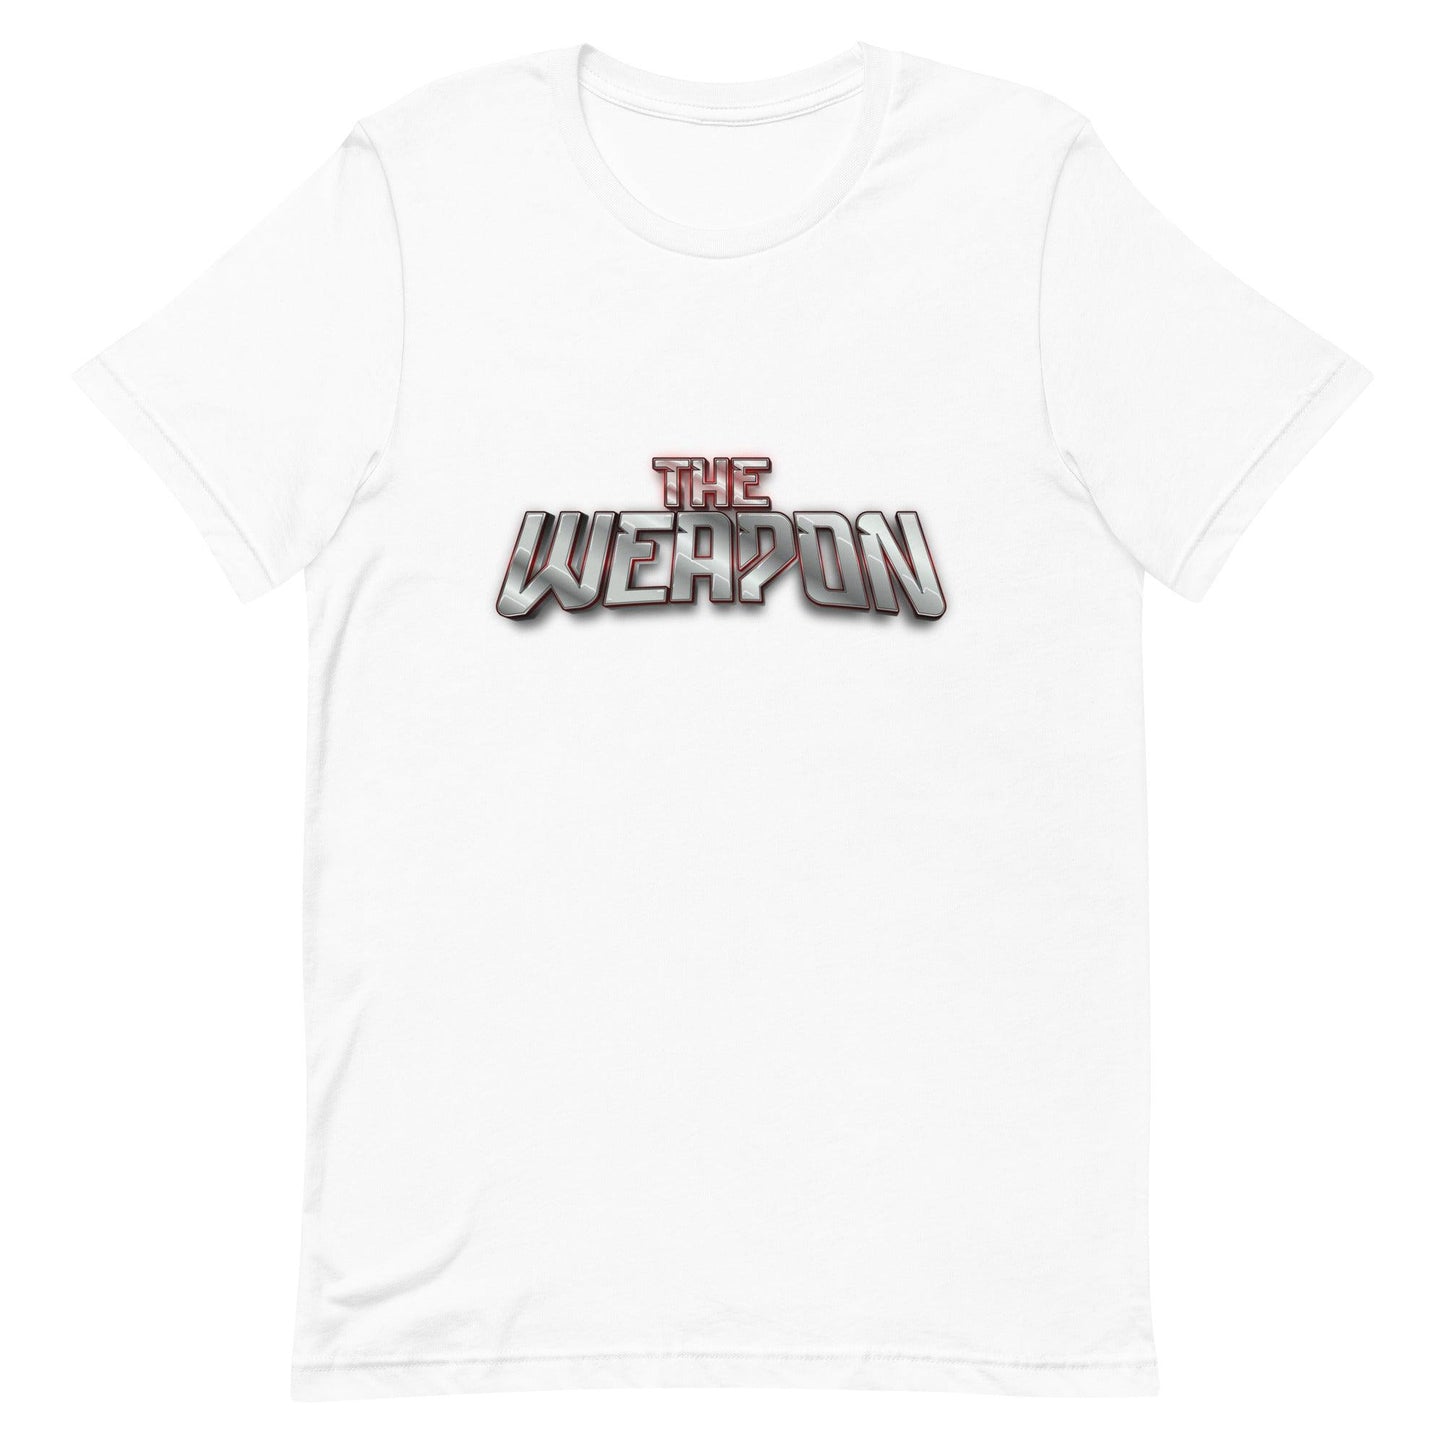 Aubrey Ward Jr. "The Weapon" t-shirt - Fan Arch